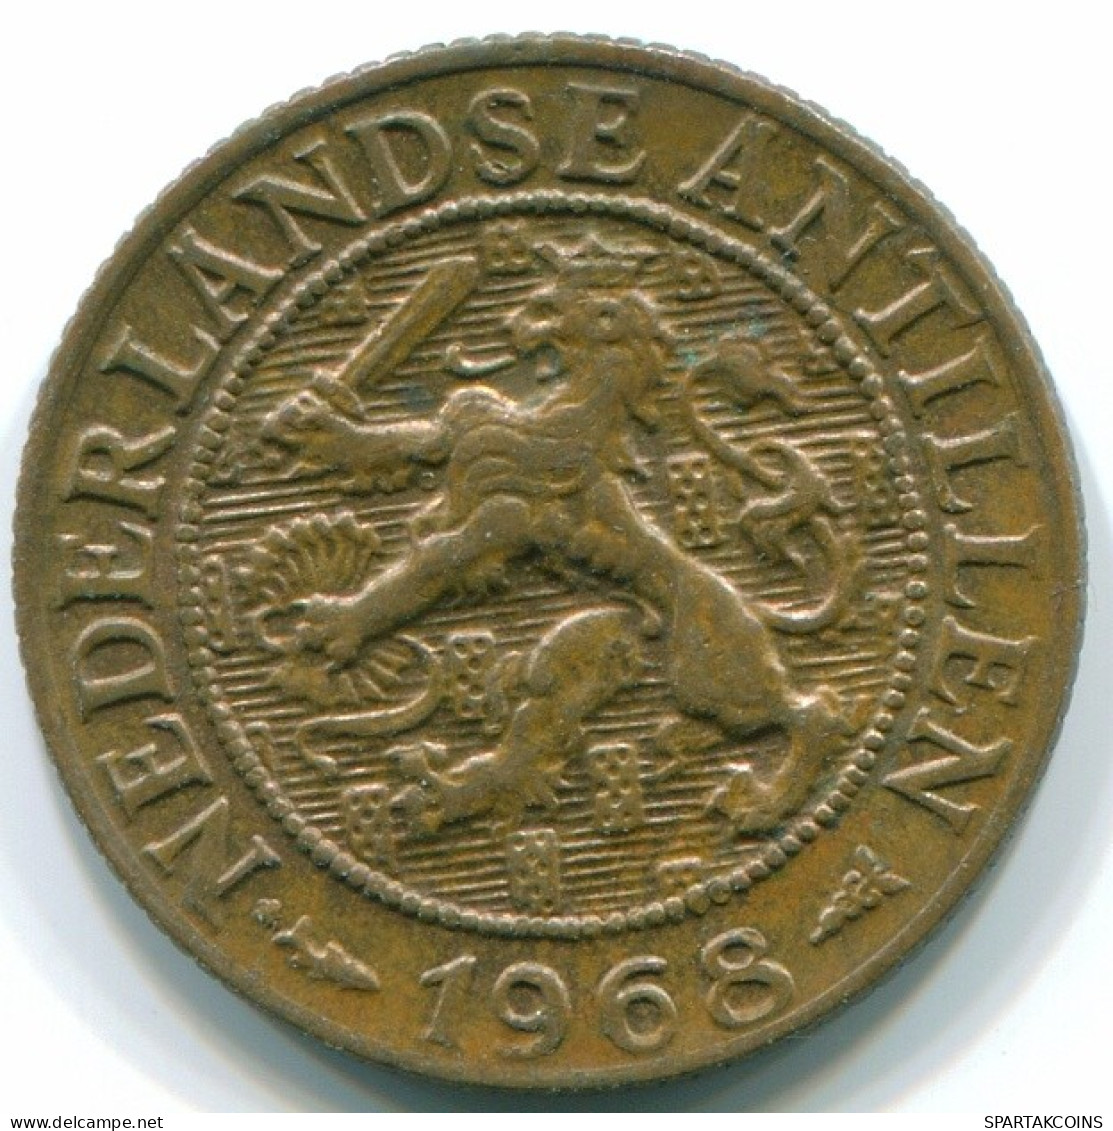 1 CENT 1968 NIEDERLÄNDISCHE ANTILLEN Bronze Fish Koloniale Münze #S10782.D.A - Netherlands Antilles